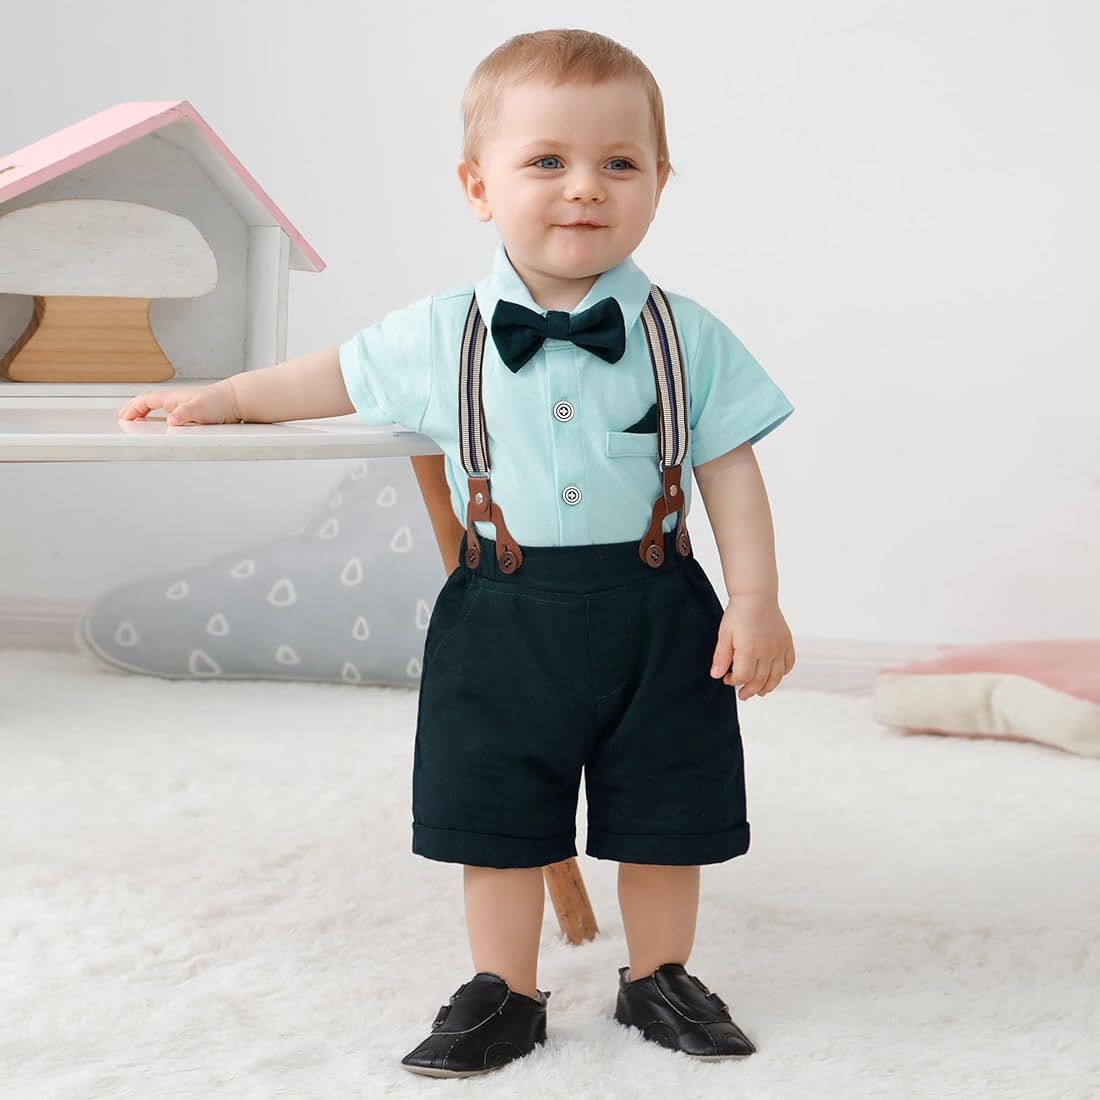 YUEMION Infant Baby Boy Clothes Gentleman Outfits Suits Summer Short Sleeve Bowtie Bodysuit Shirts + | Amazon (US)